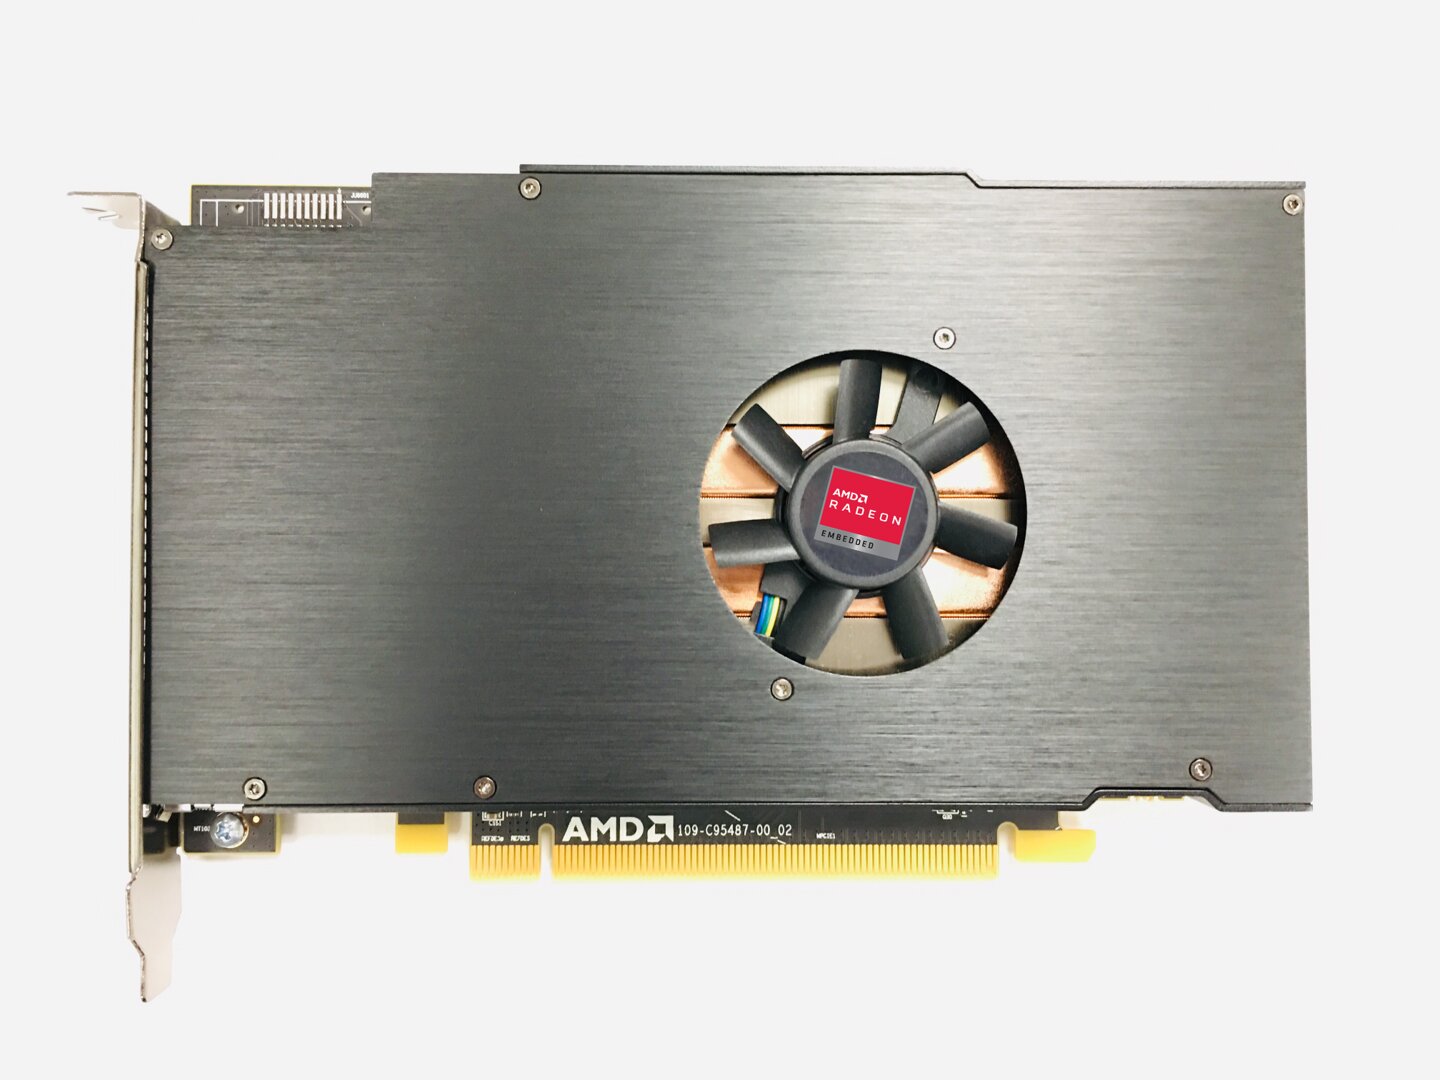 AMD Radeon Embedded E9390